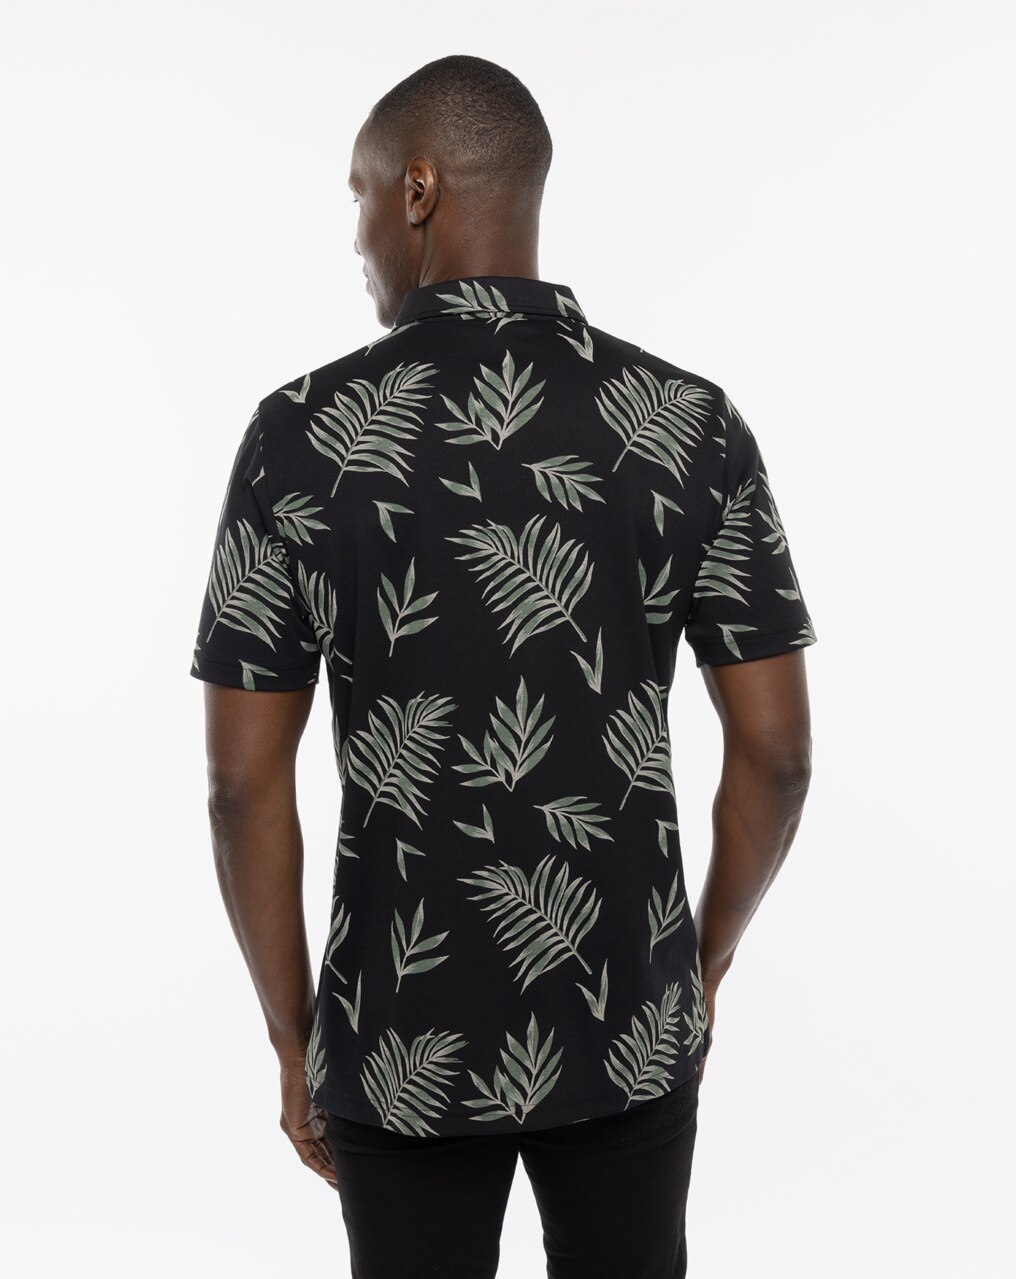 Buy Black Script Long Sleeve Top from the Pineapple online store